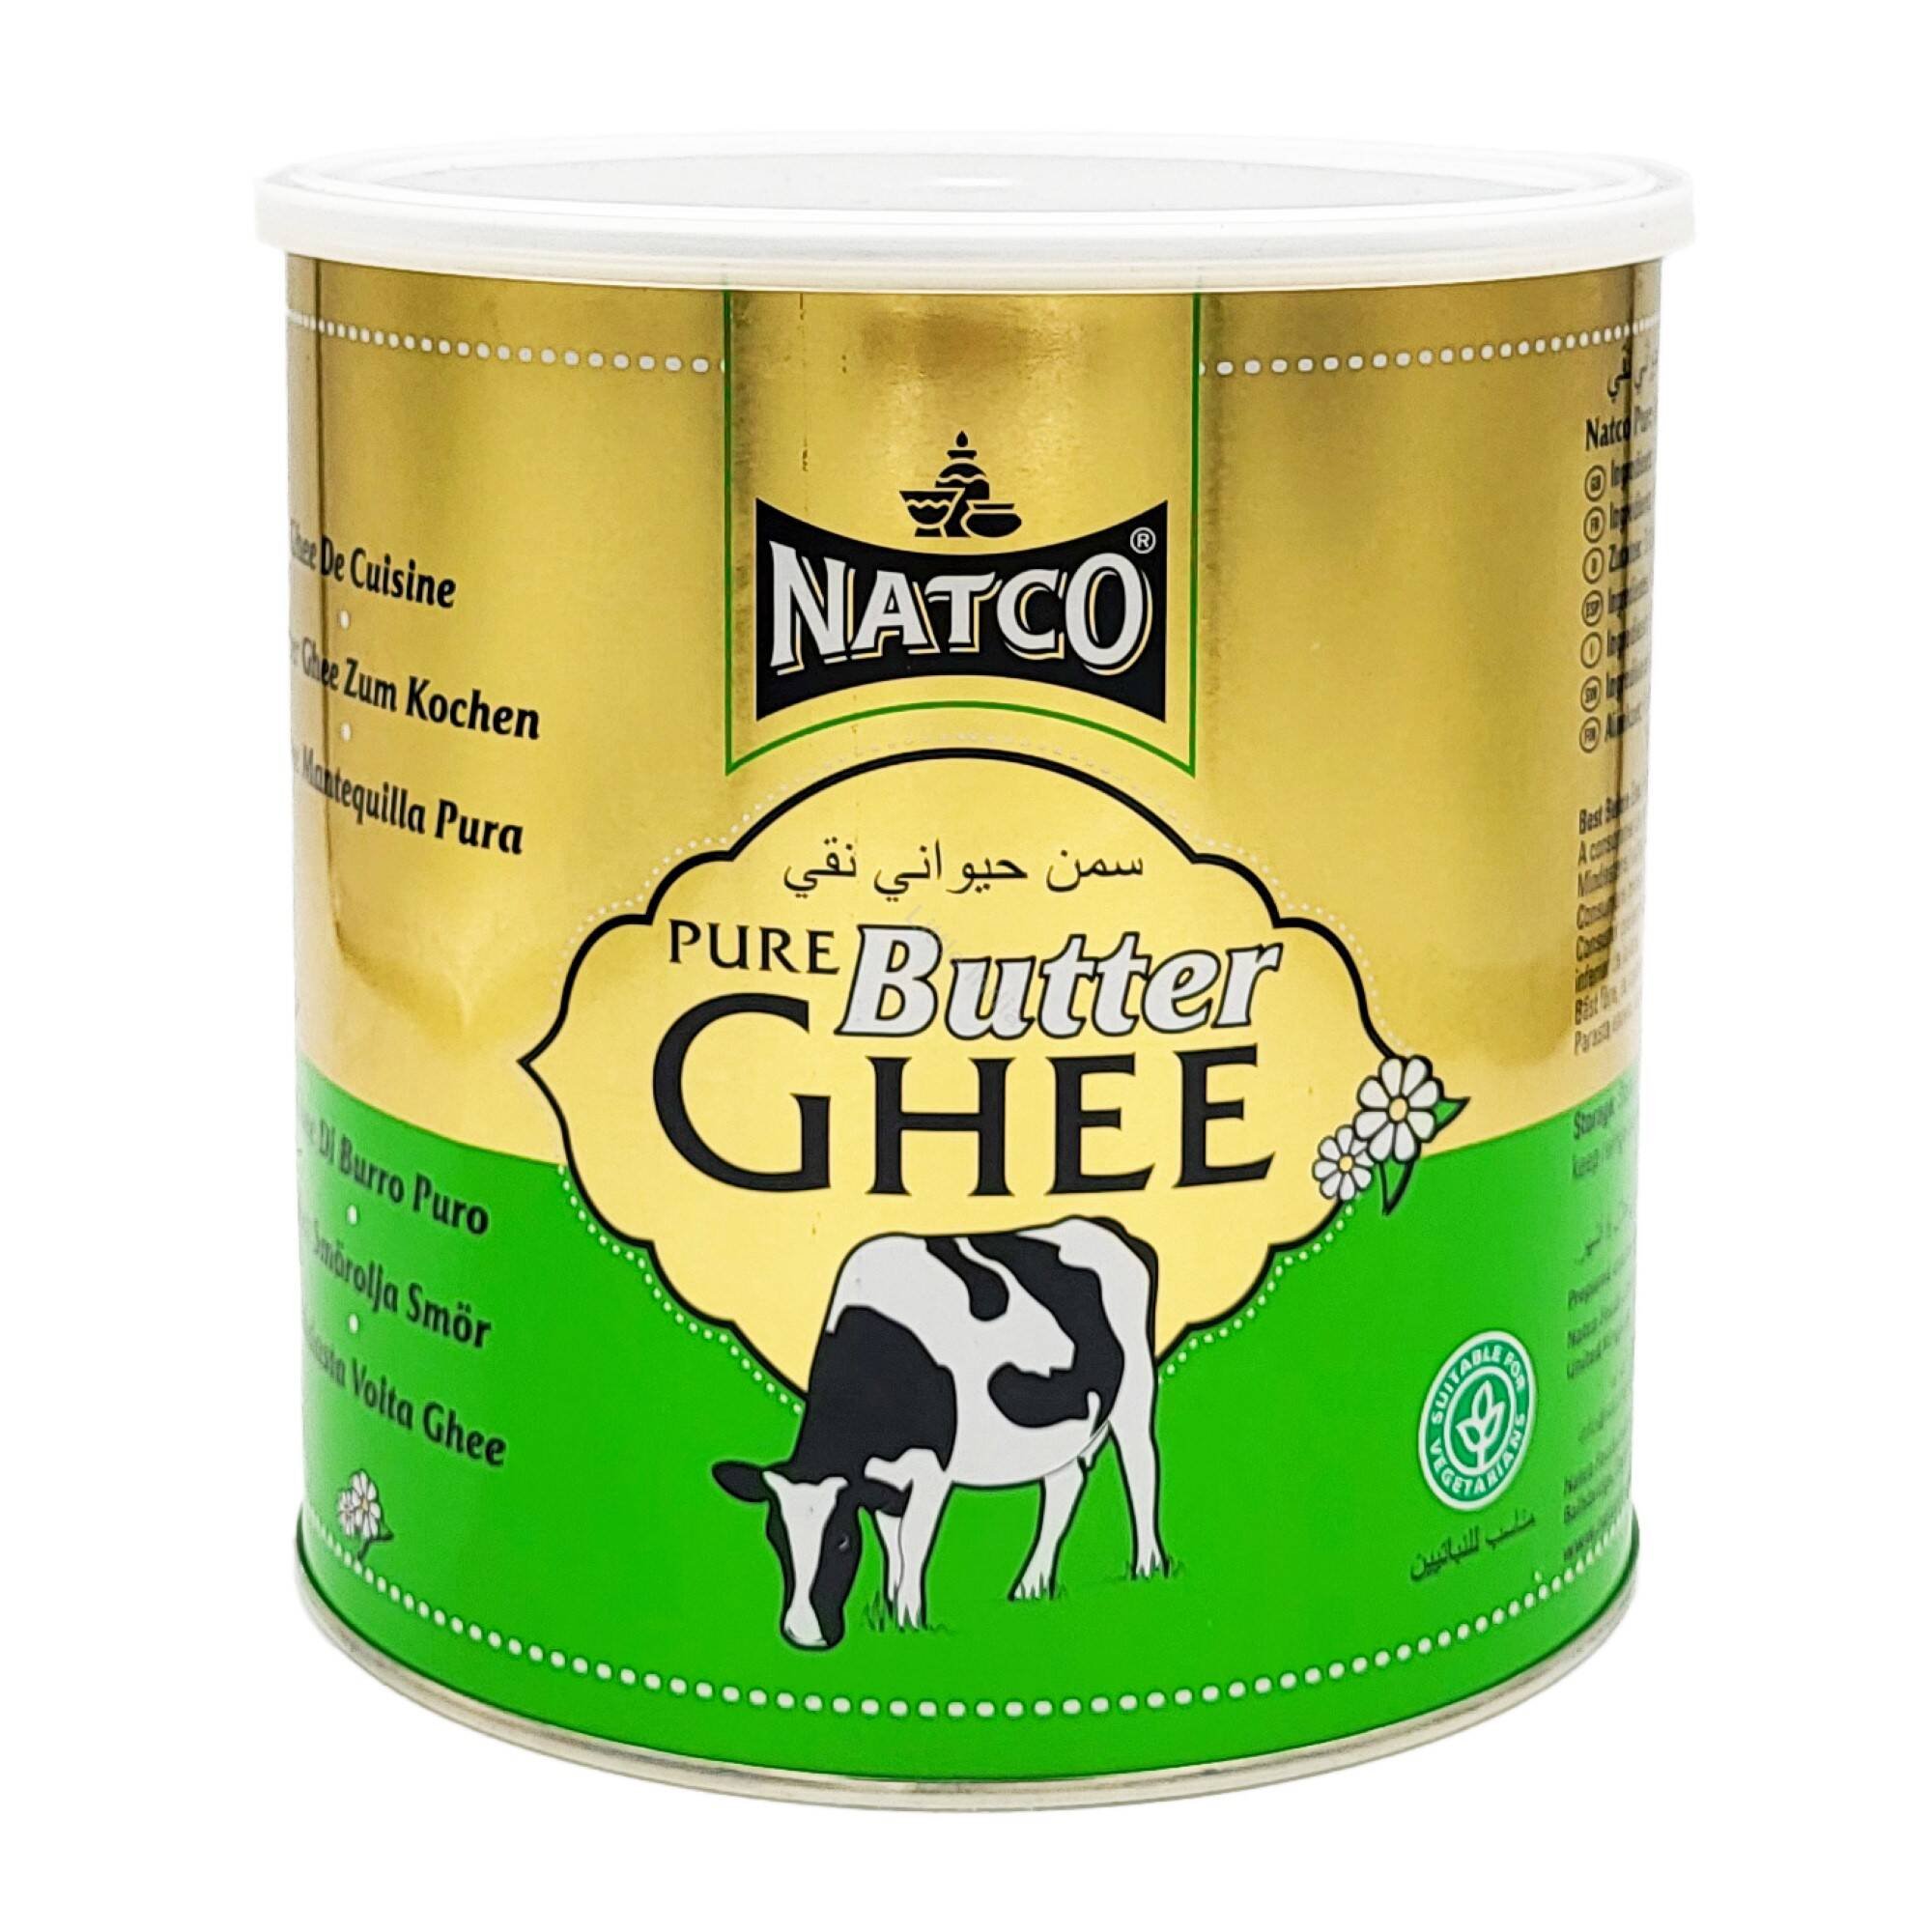 Natco Pure Butter Ghee 2kg